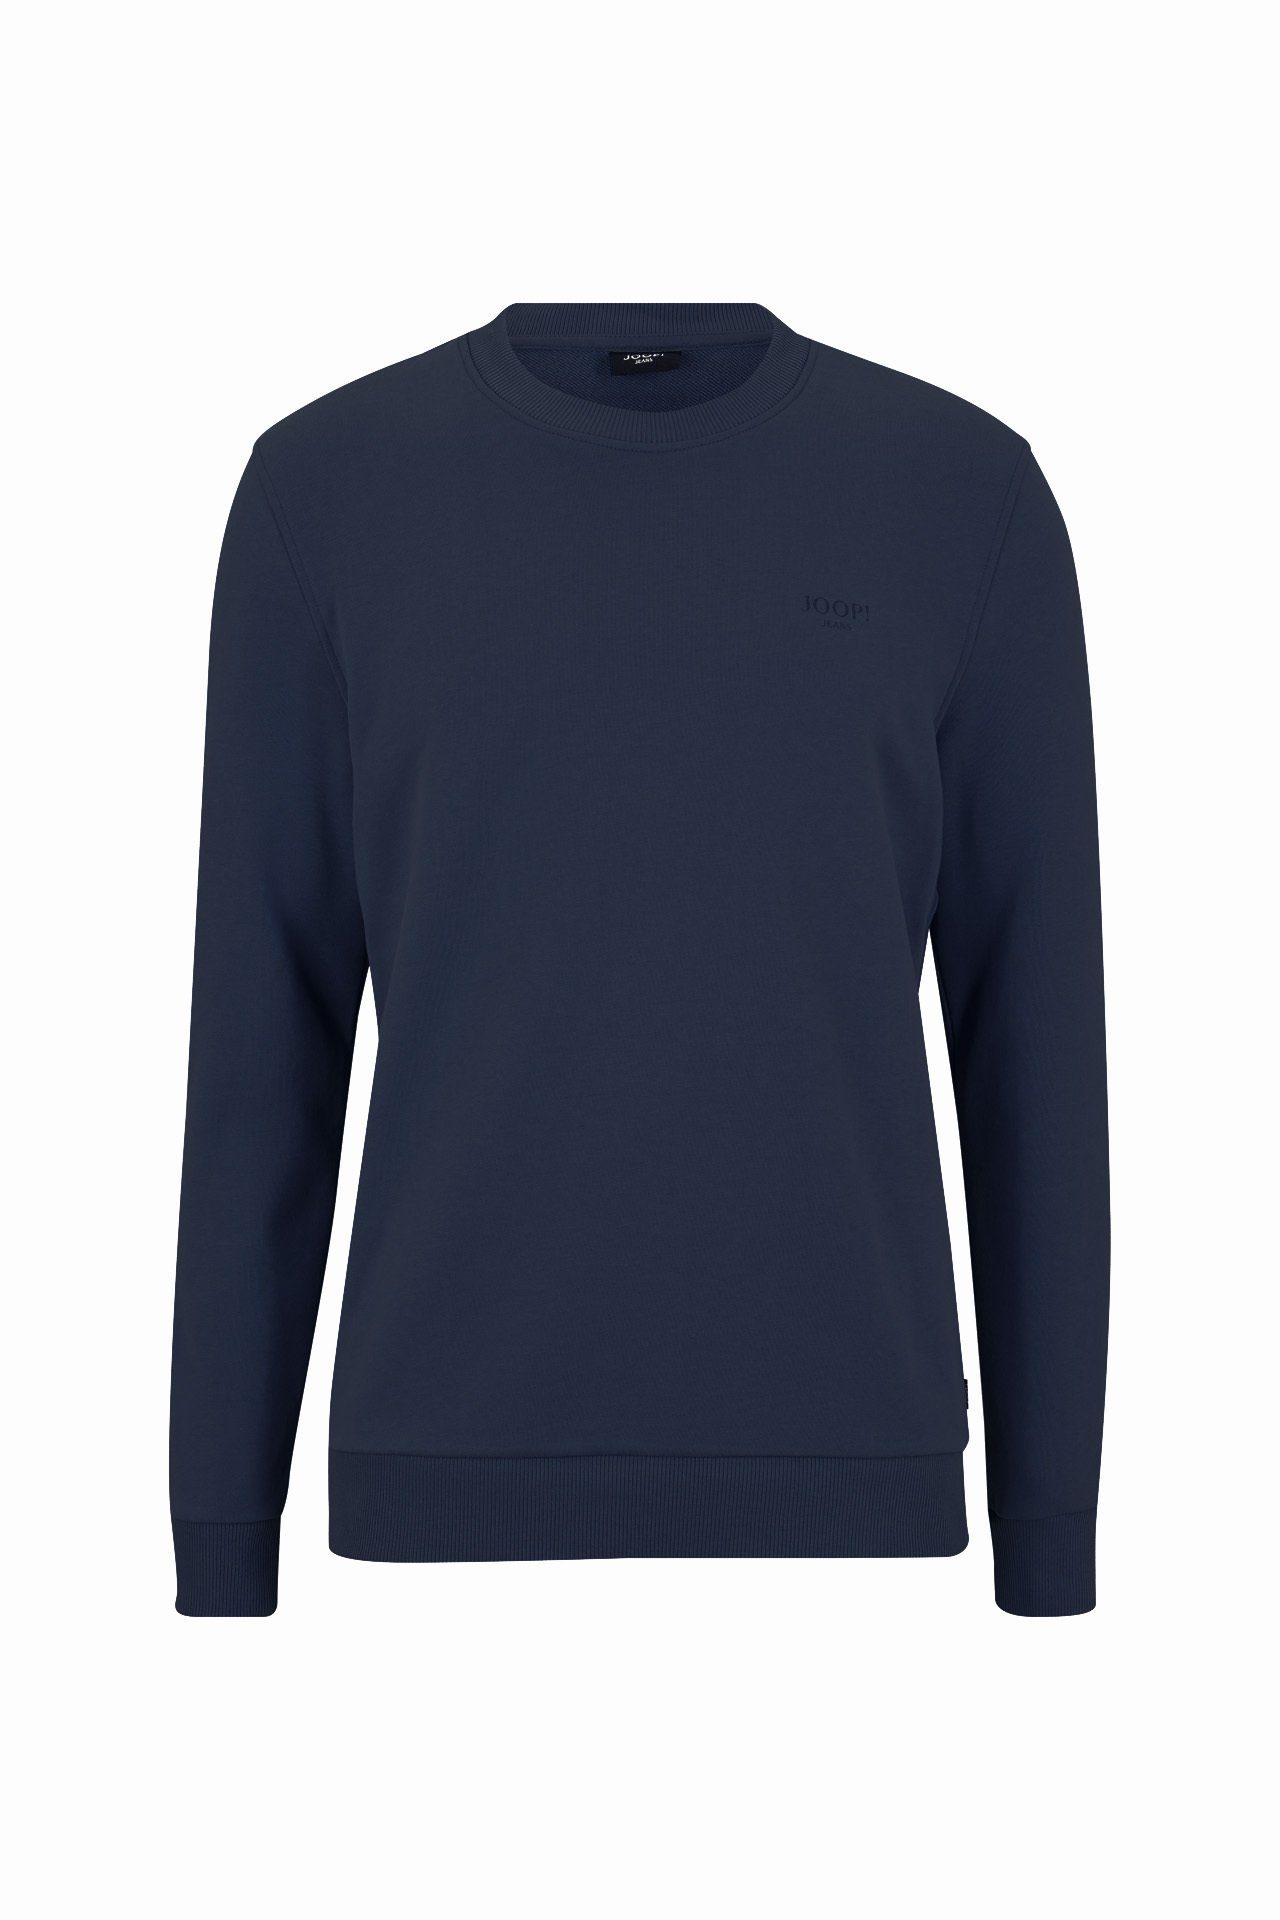 Joop Jeans Sweatshirt »Herren Sweatshirt - JJJ-22Alf, Sweater, Rundhals,«  online kaufen | OTTO